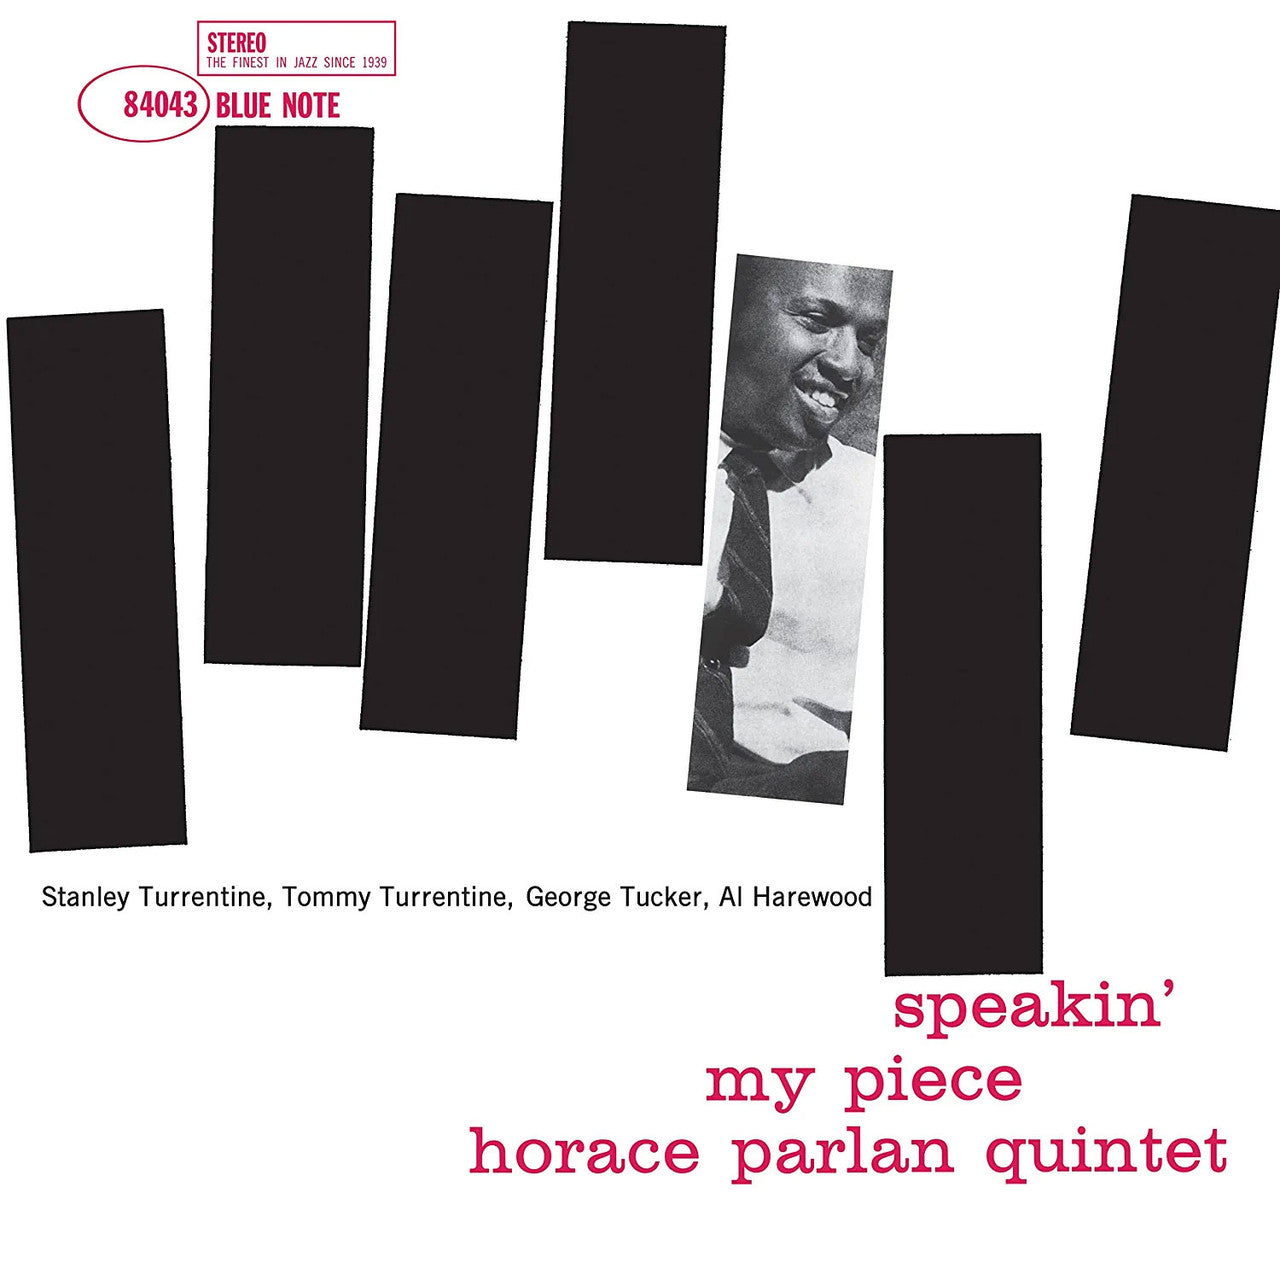 Horace Parlan Quintet – Speakin' My Piece – Blue Note Classic LP 